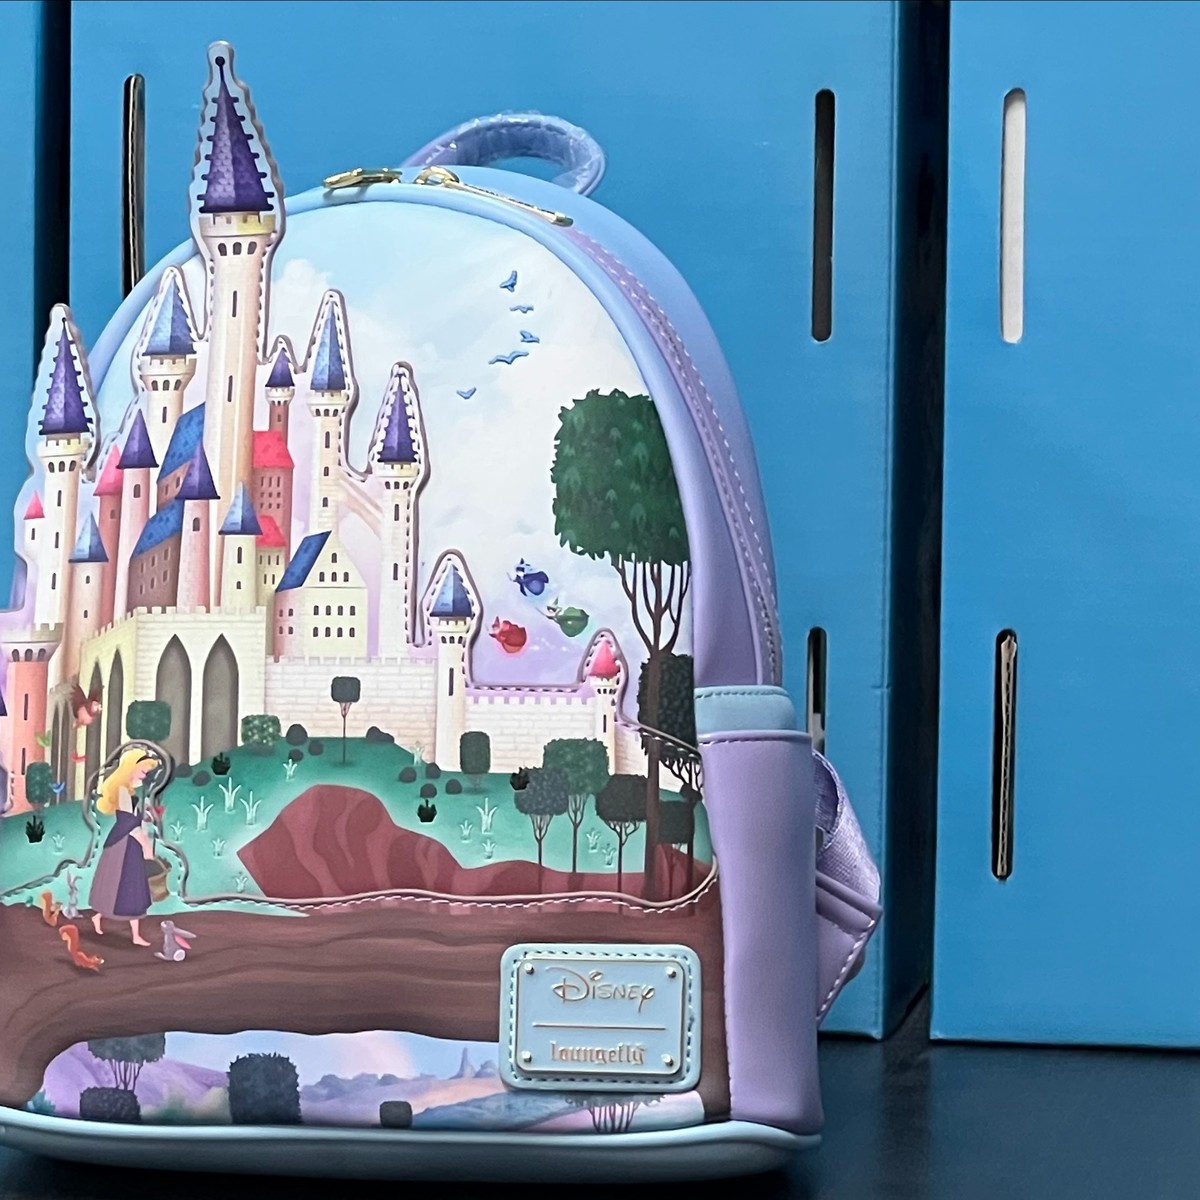 Disney Princess Castle Series Sleeping Beauty Mini Backpack